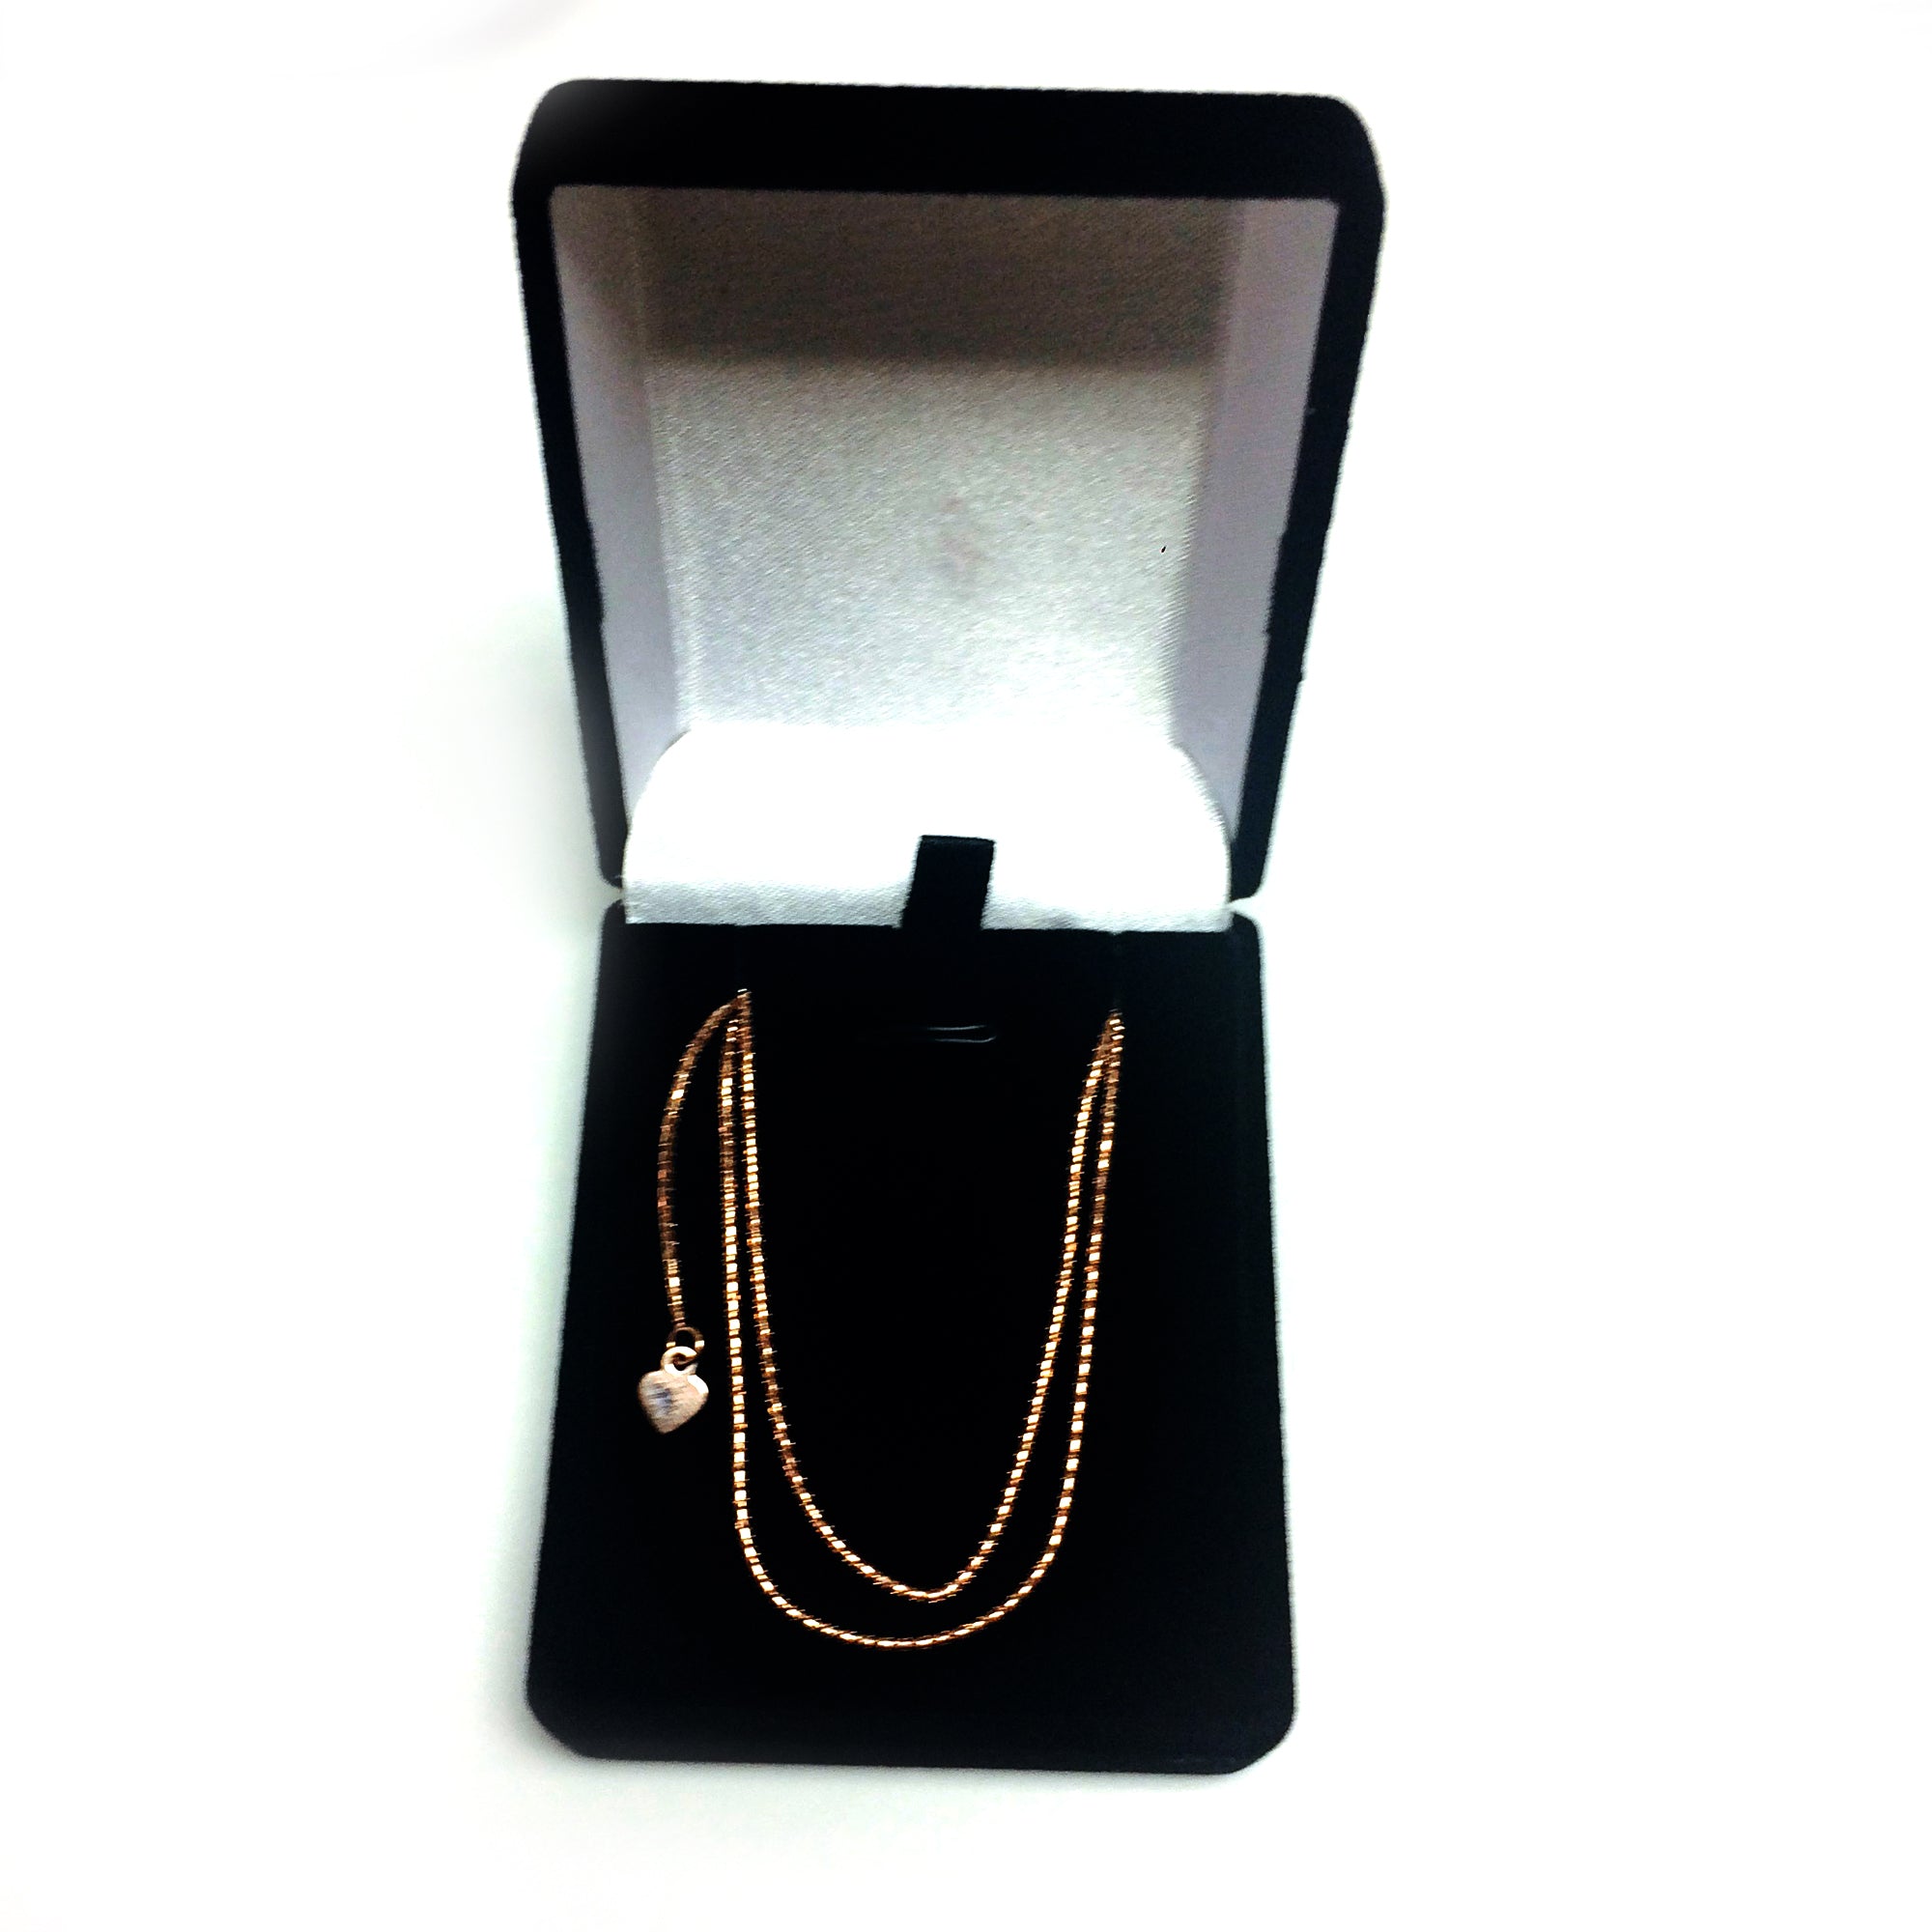 14k Rose Gold Adjustable Popcorn Link Chain Necklace, 1.3mm, 22" fine designer jewelry for men and women